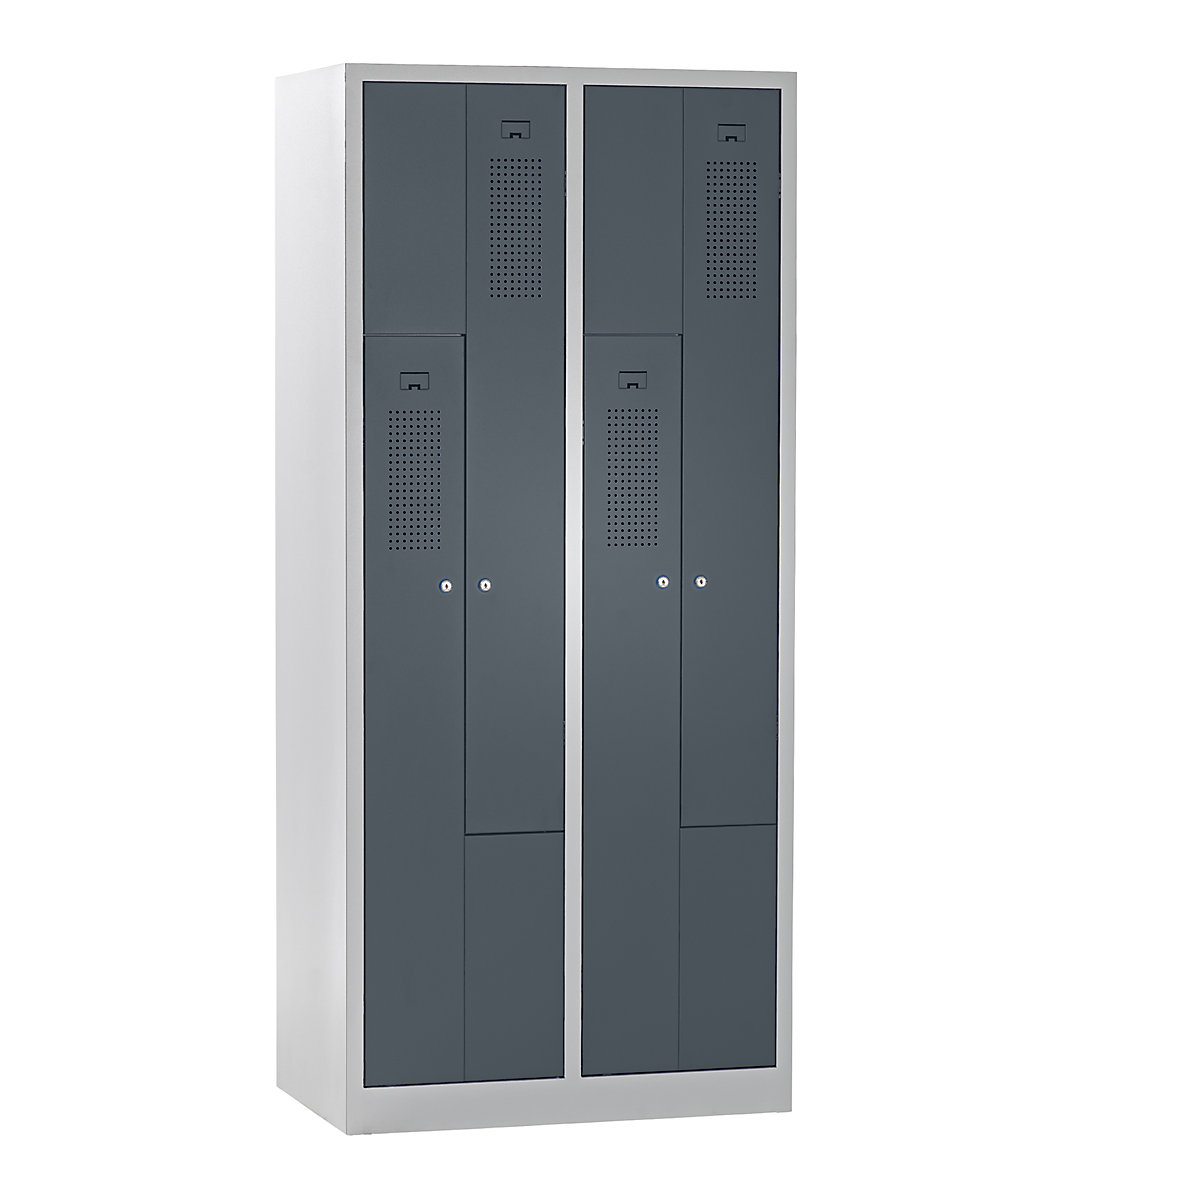 AMSTERDAM Z cloakroom locker – eurokraft basic, width 800 mm, 2 compartments, 4 doors, door colour basalt grey, body in light grey-6